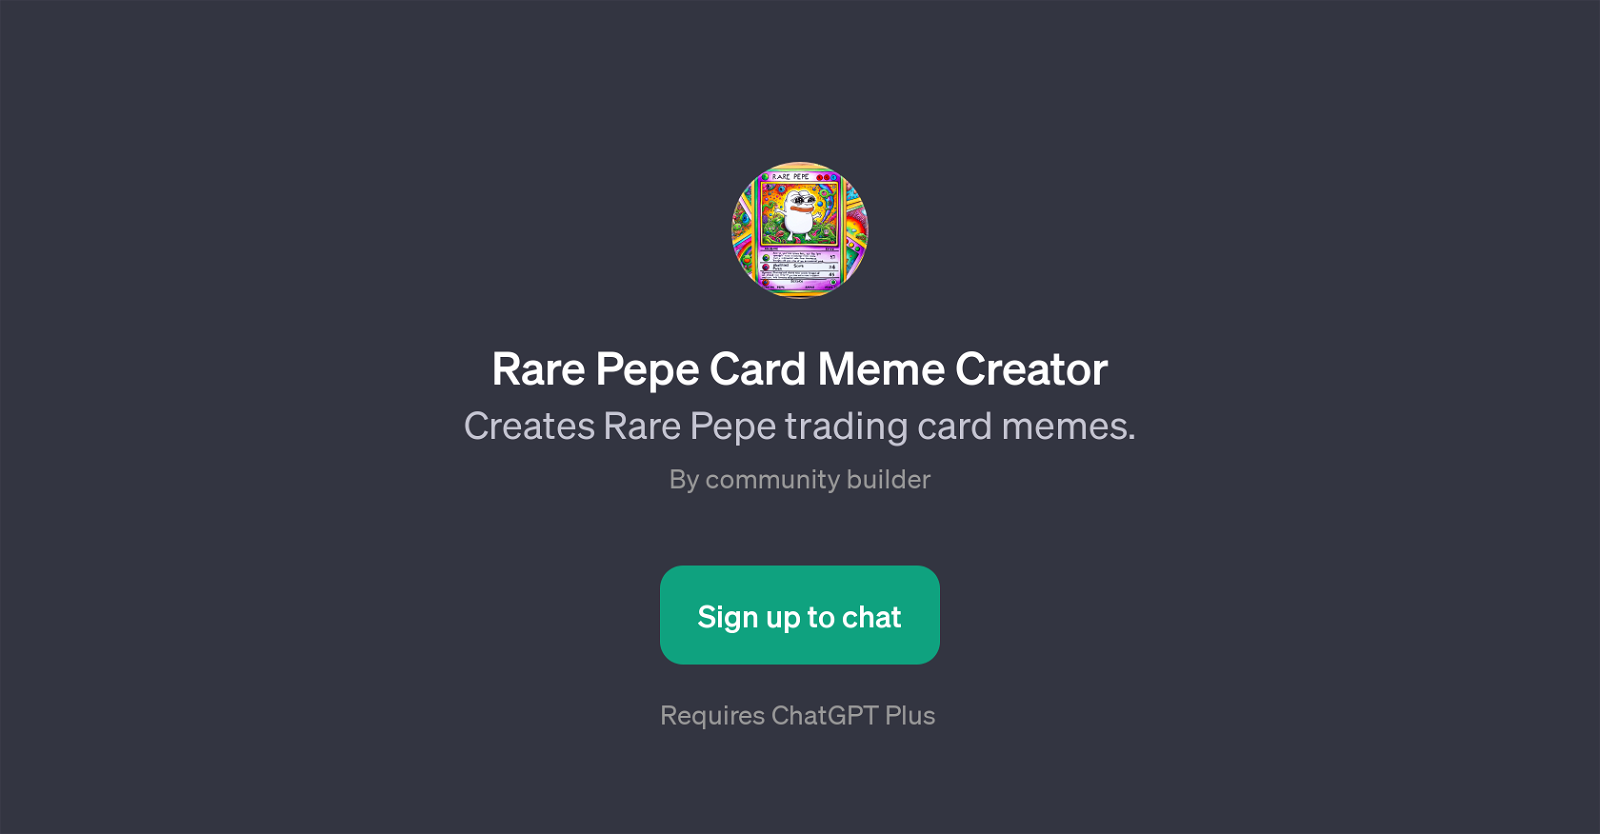 Rare Pepe Card Meme Creator website